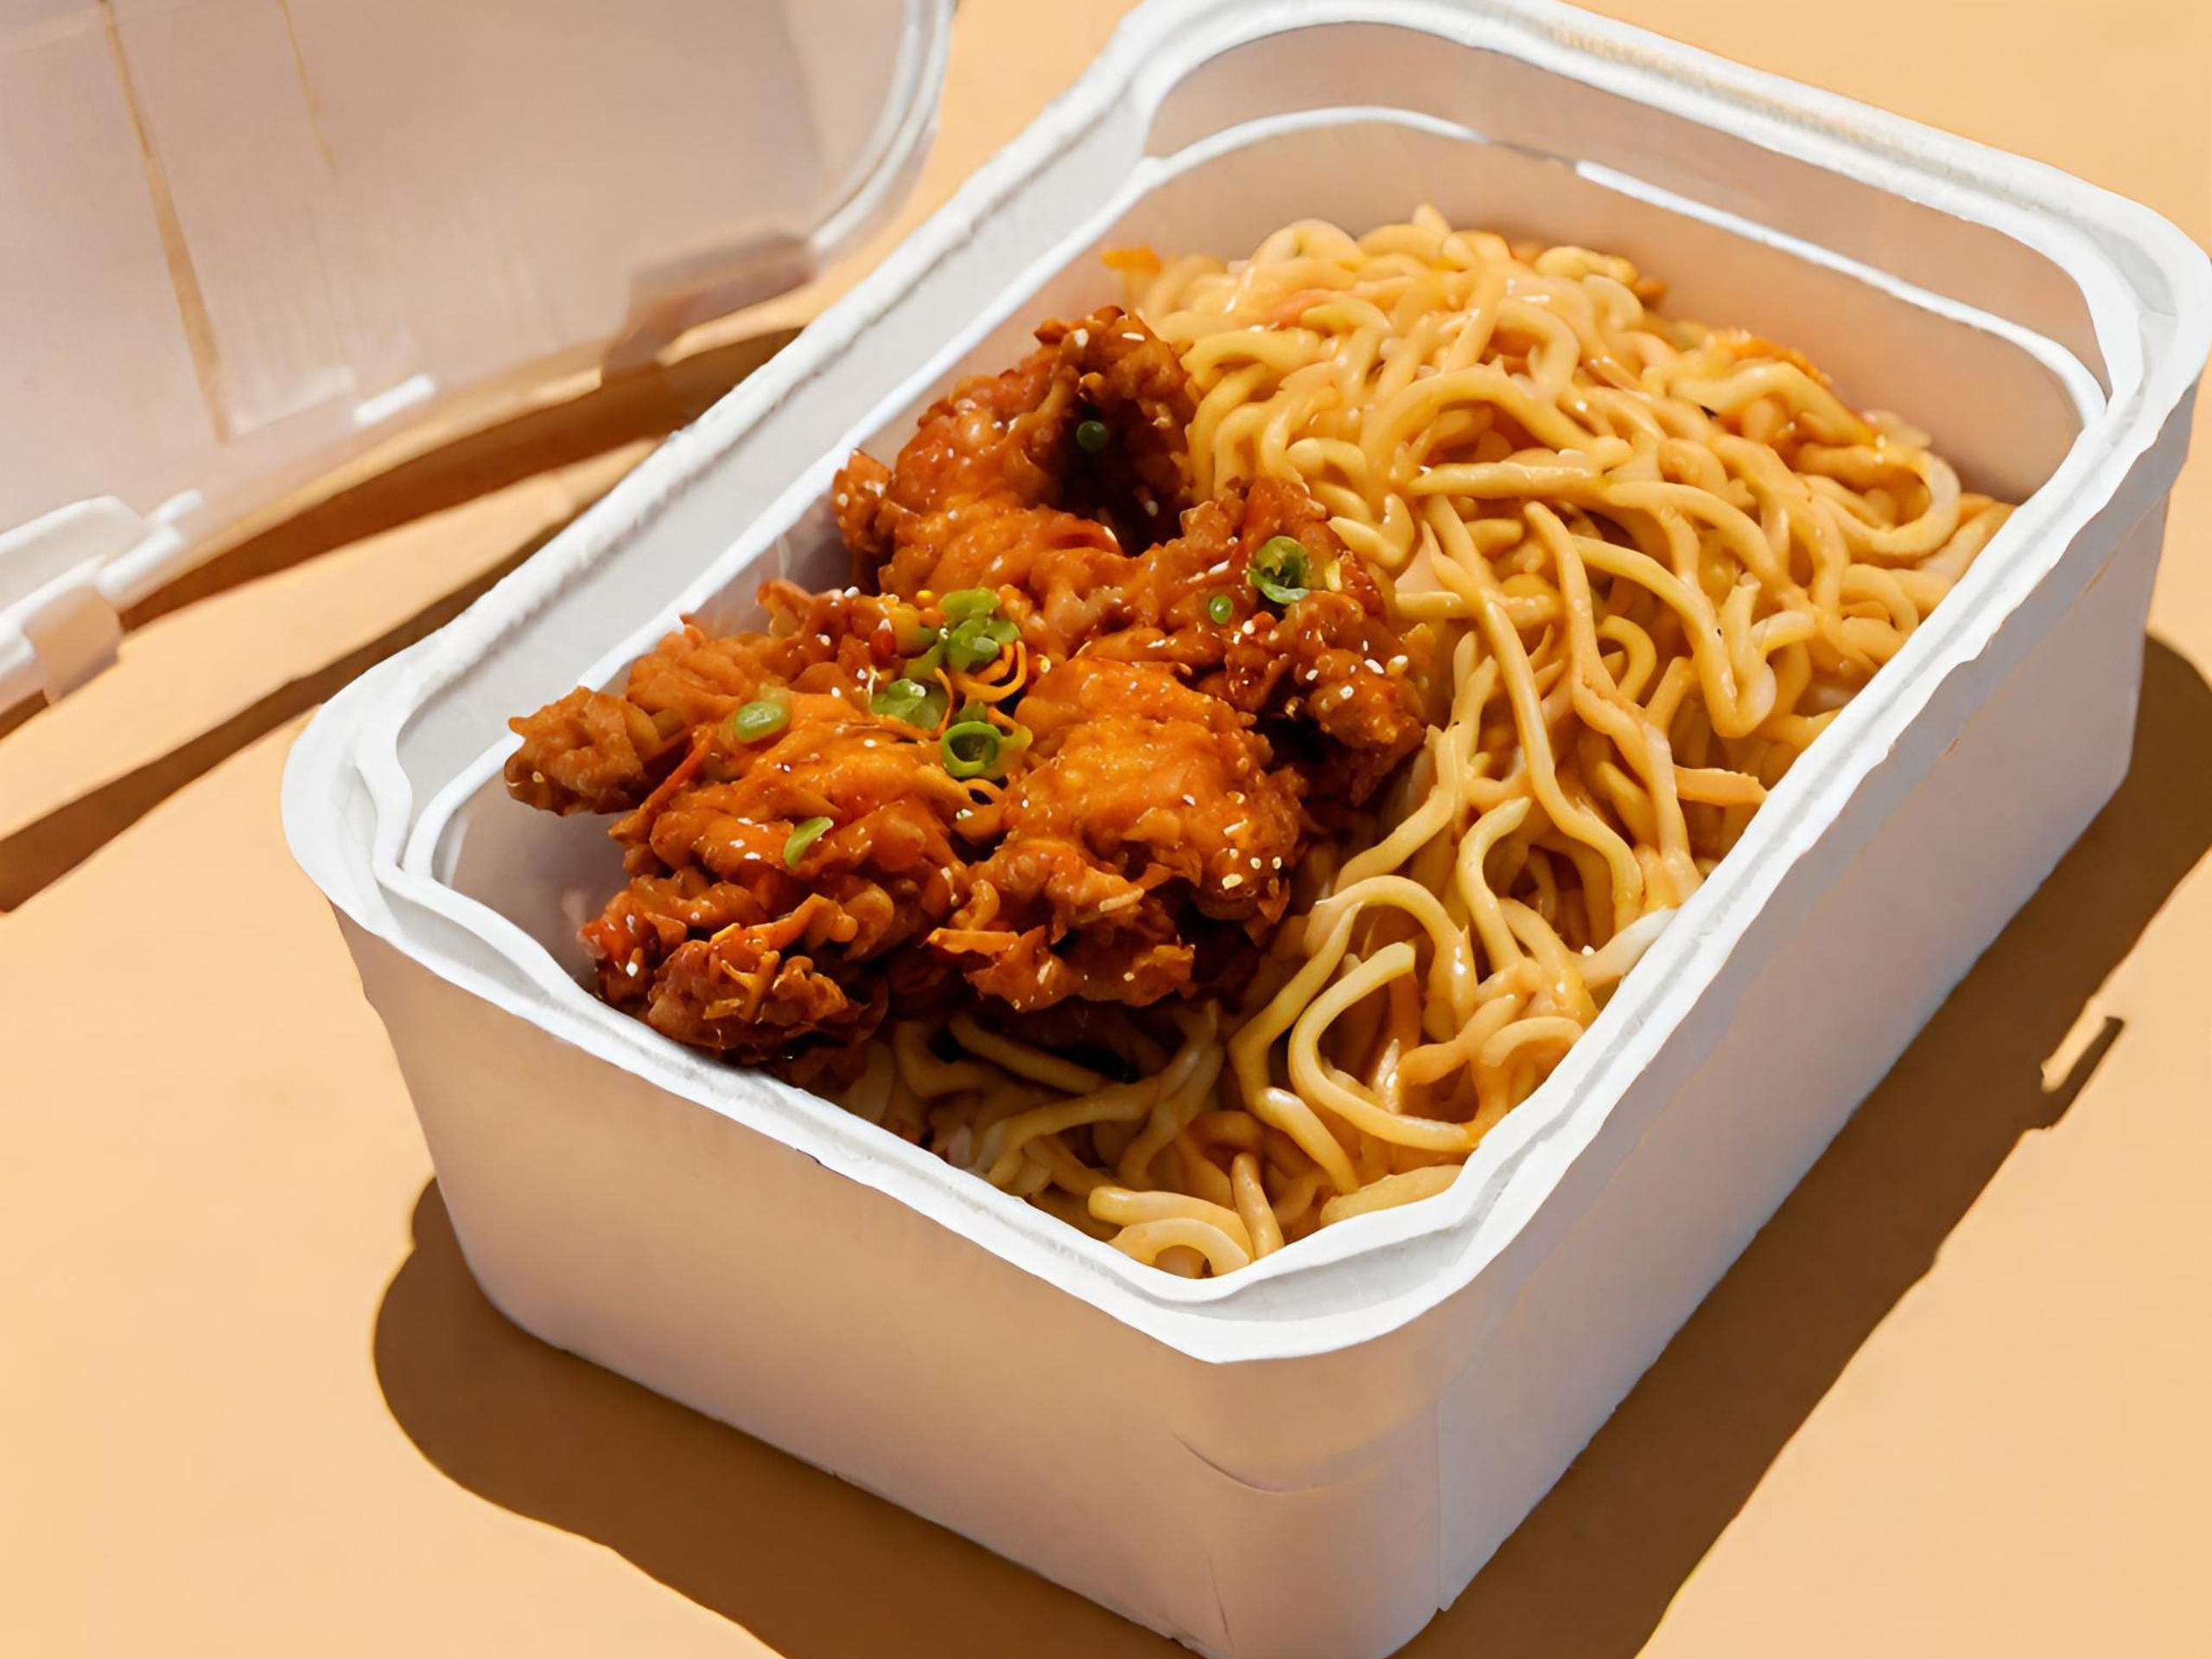 Korean BBQ and noodles